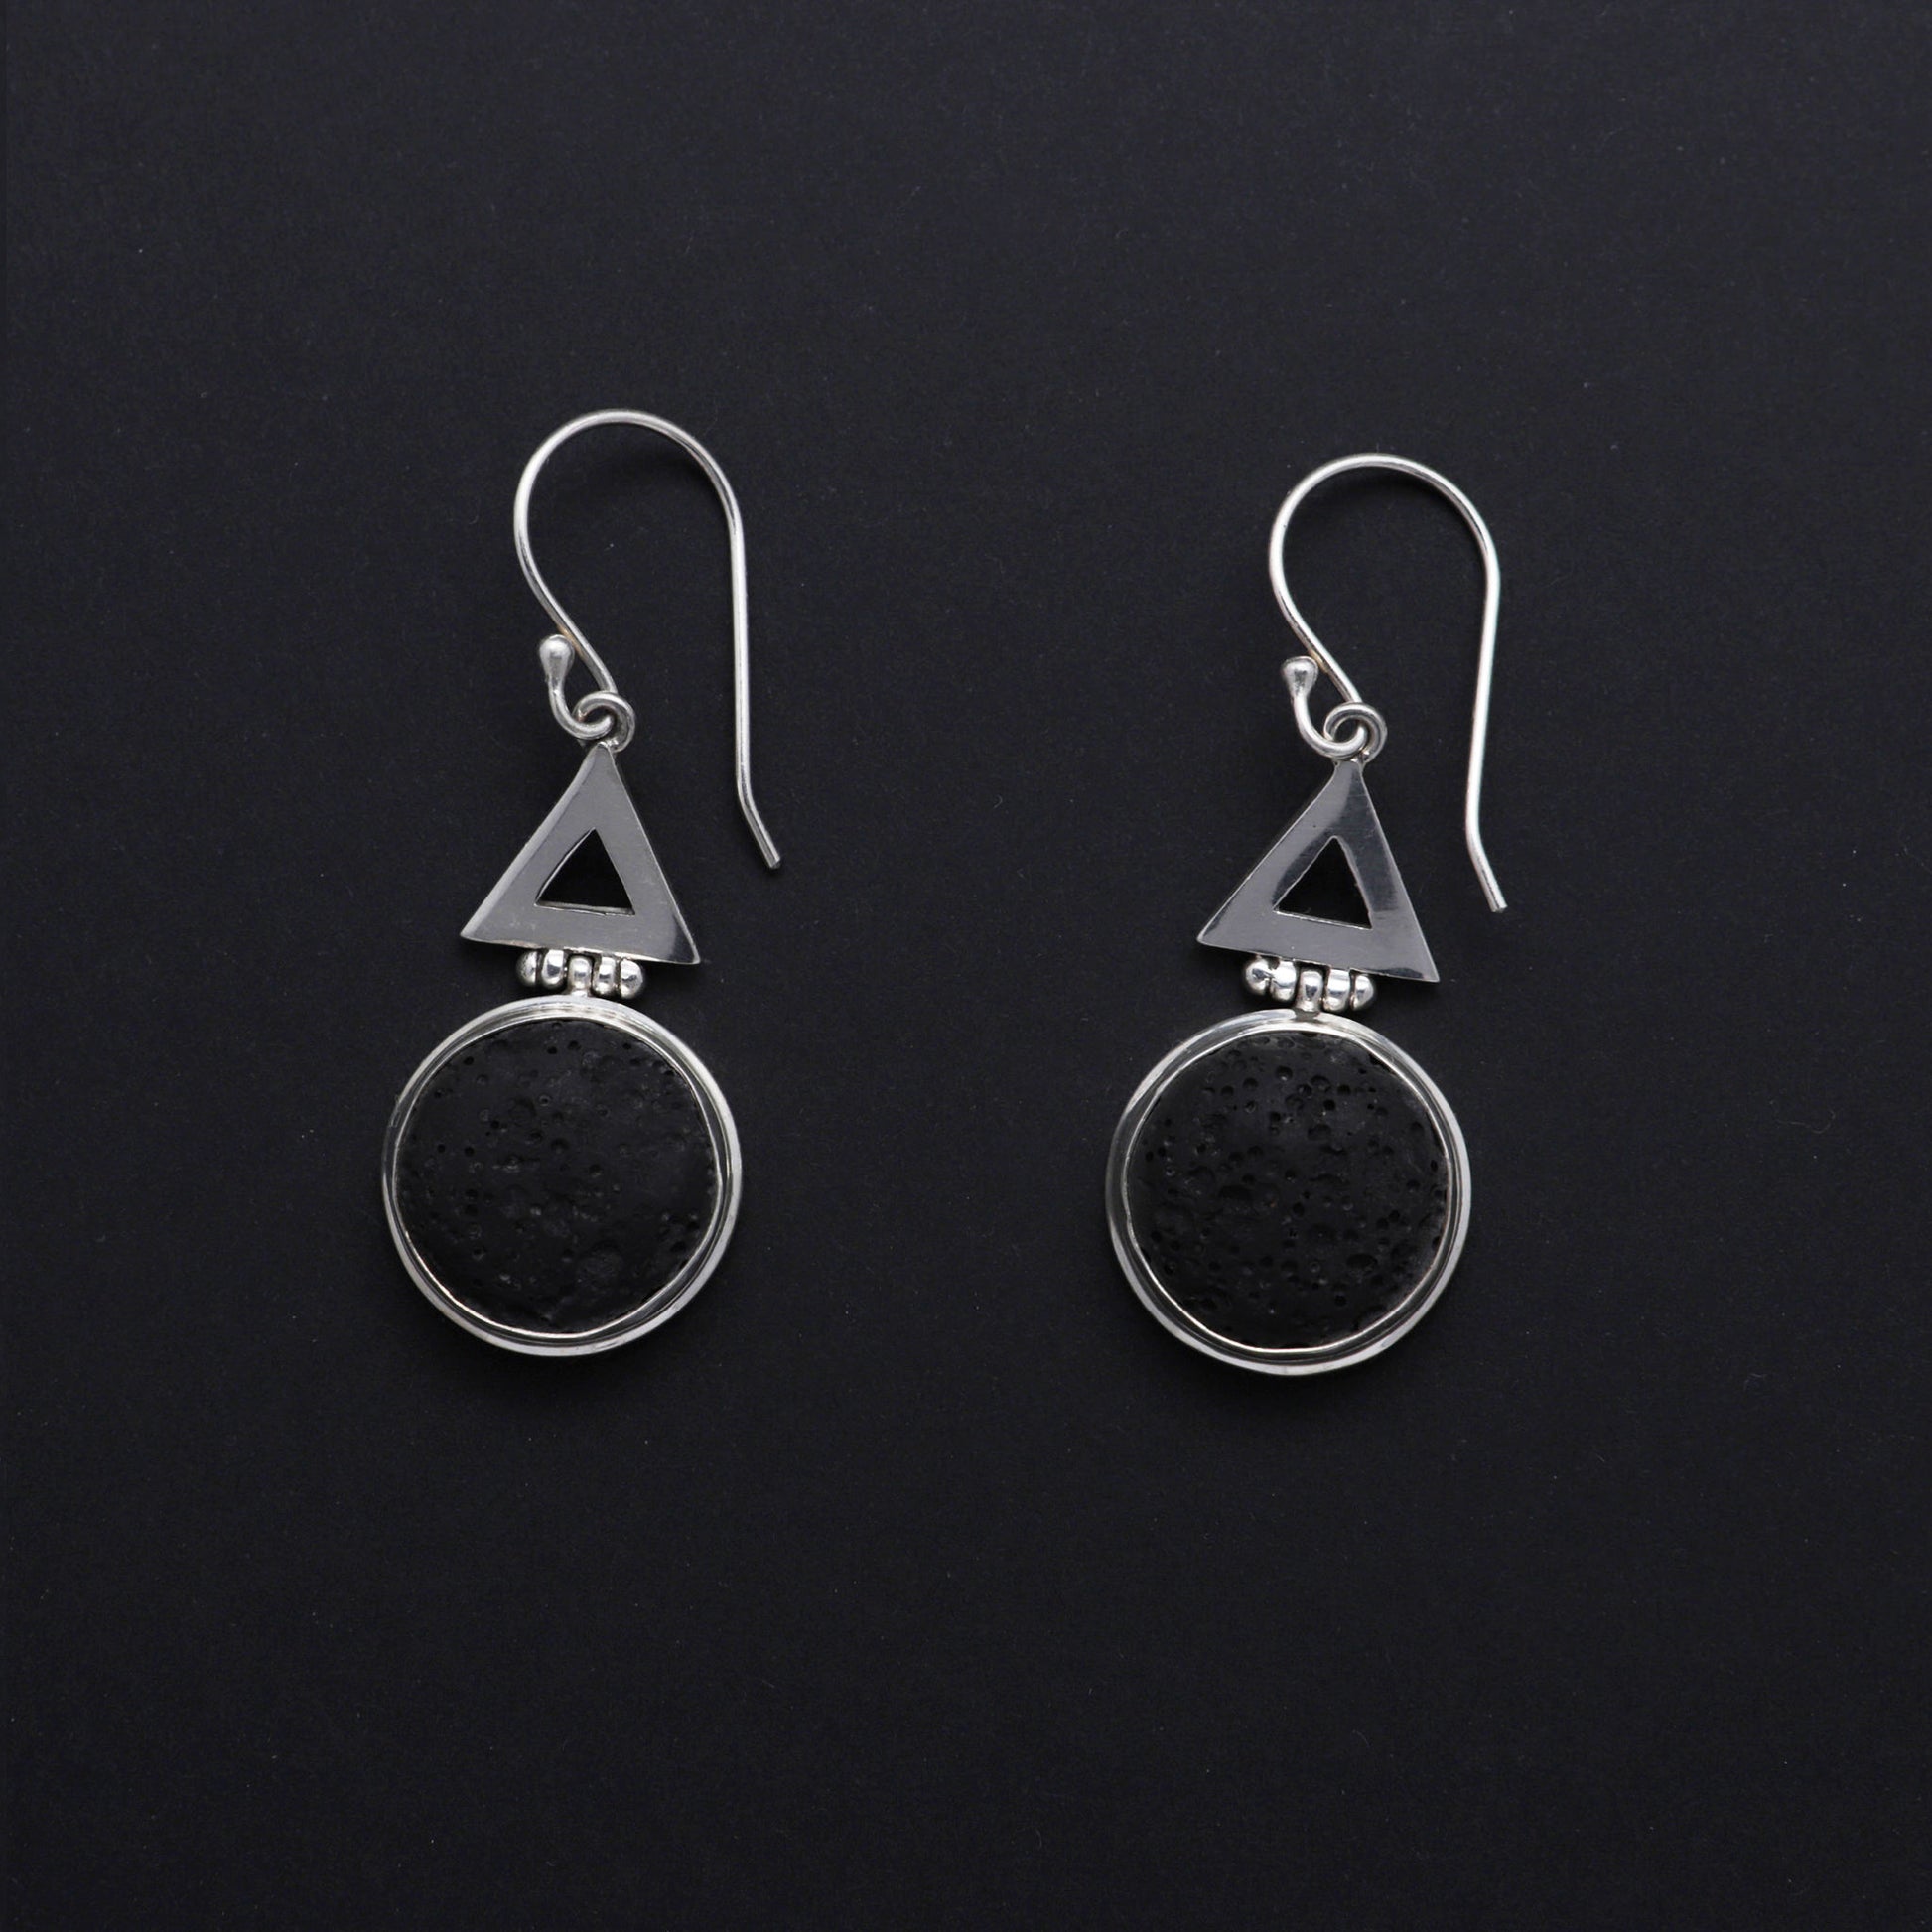 Kaldera Atelier Echo & Echo, rond Earrings in 925 Sterling Silver and Mount Agung Lava Stone.  